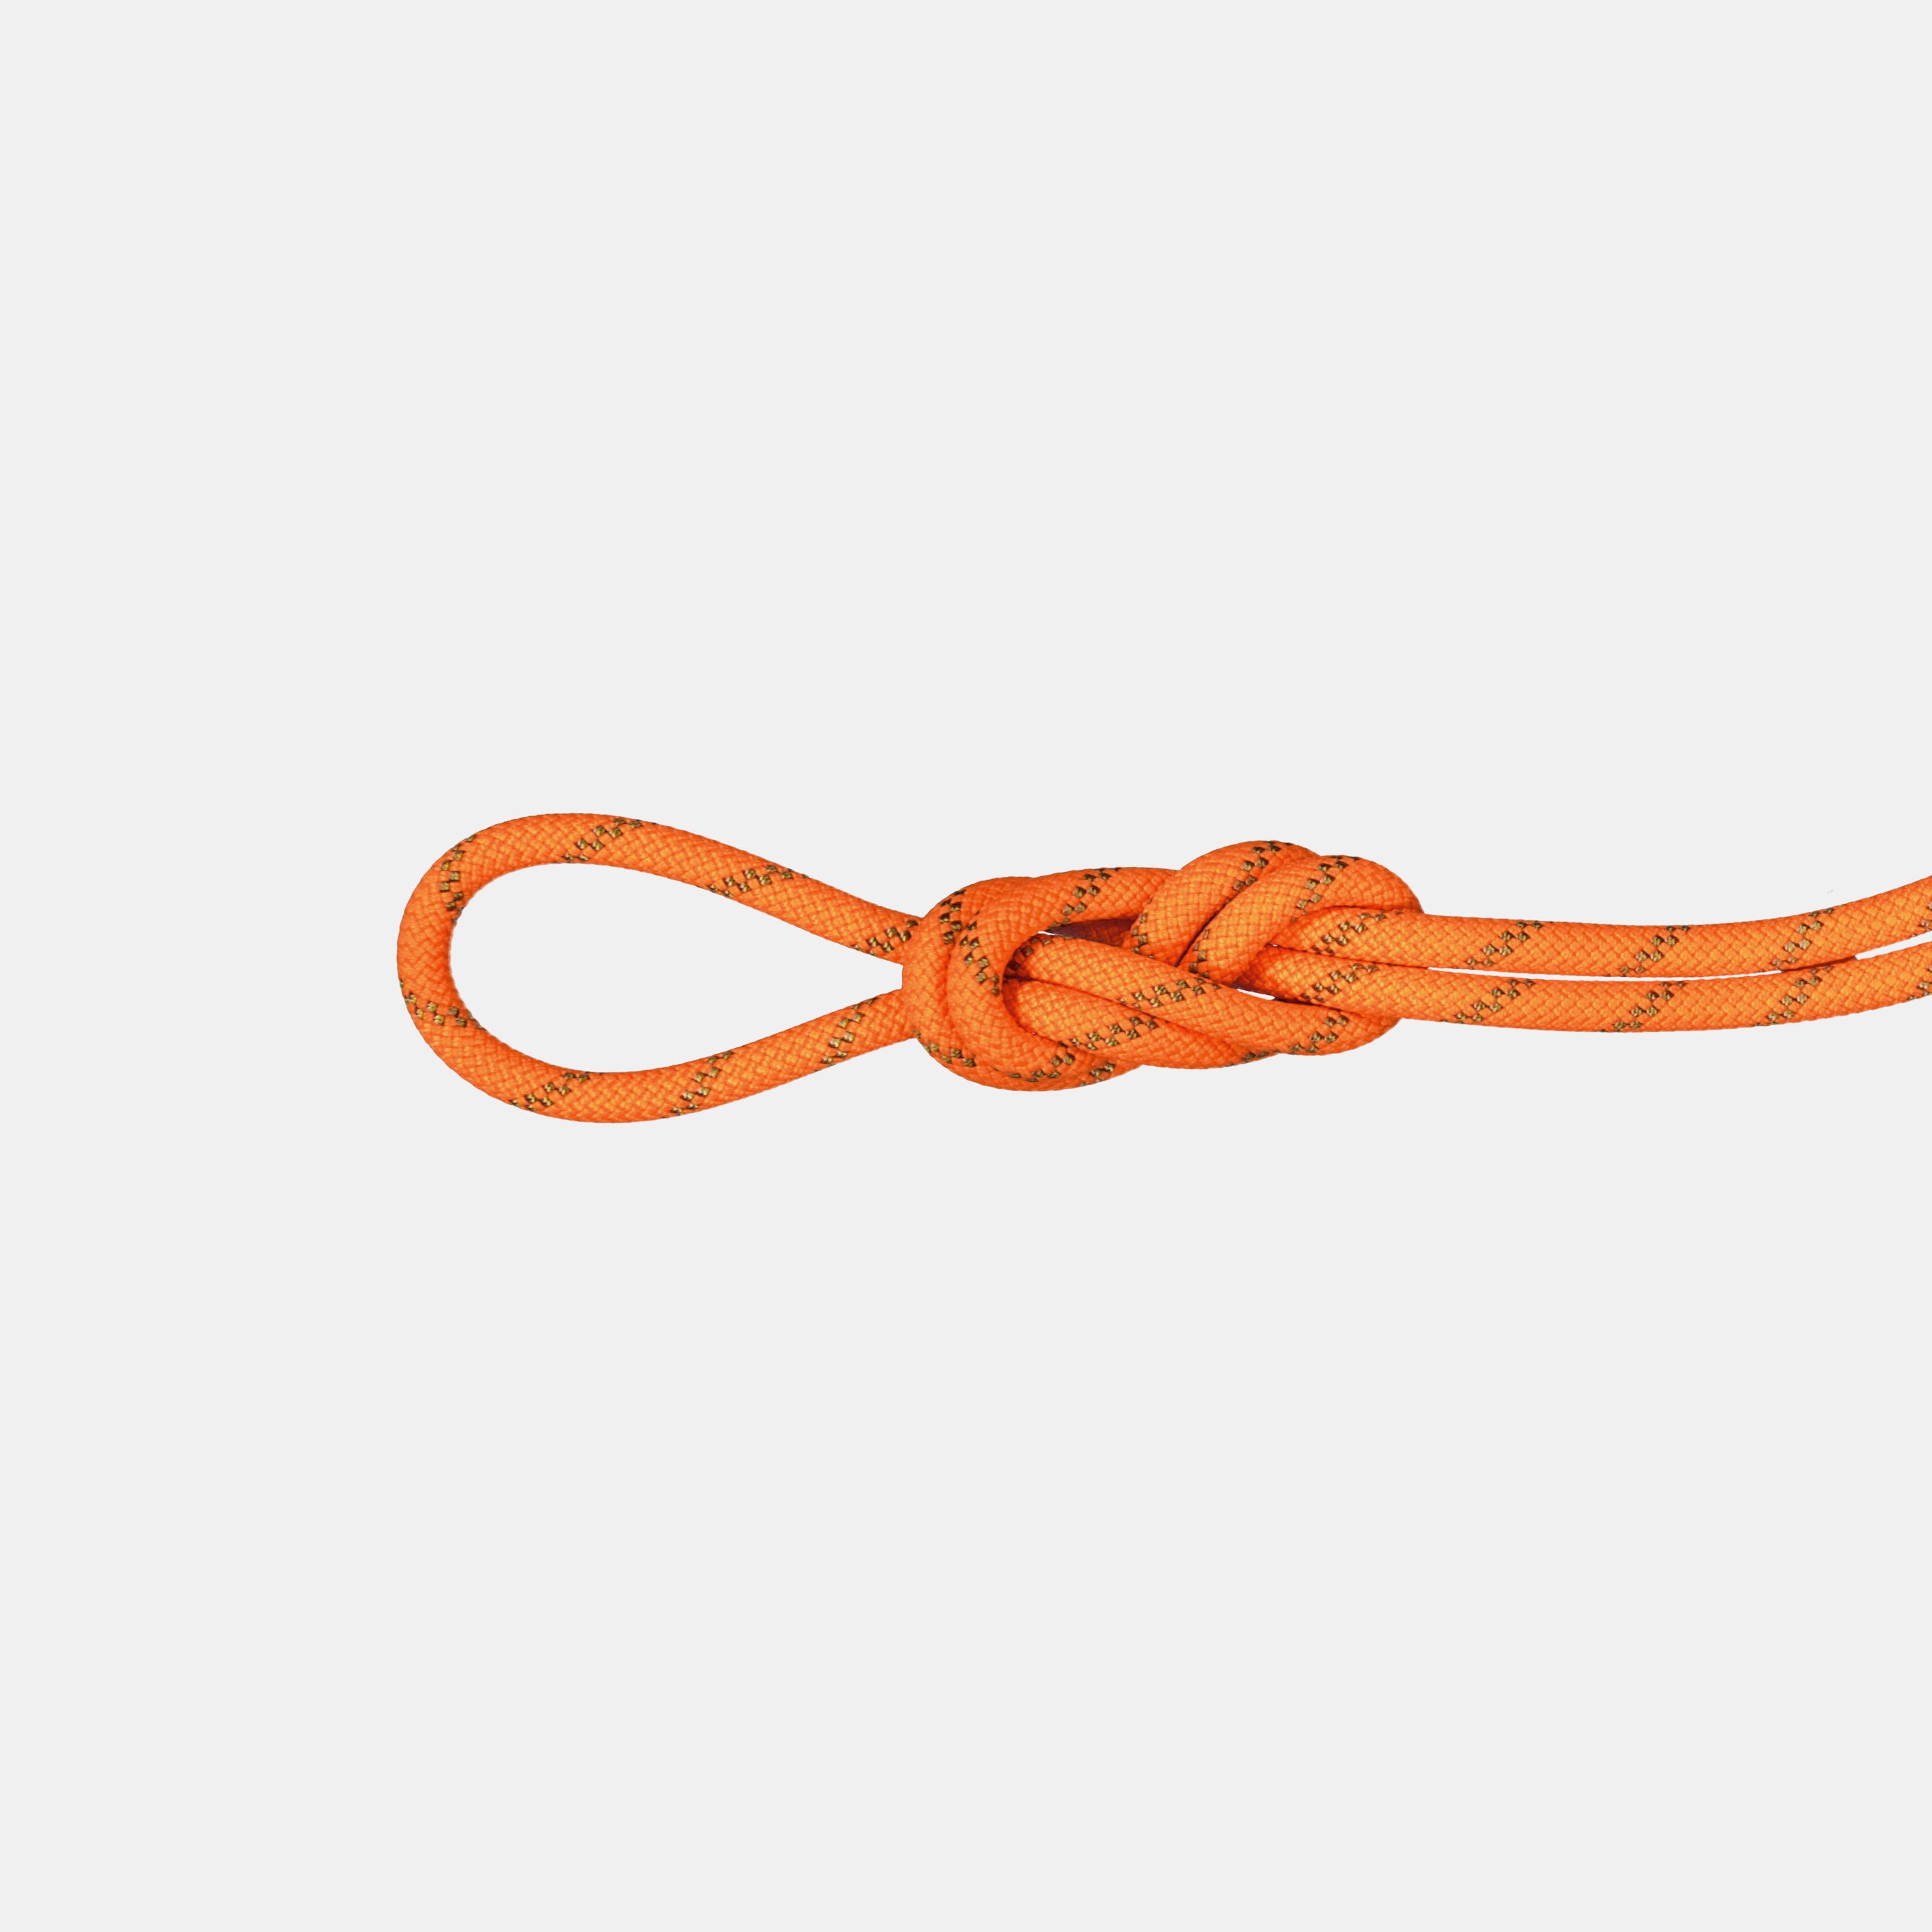 8.0 Alpine Dry Rope product image